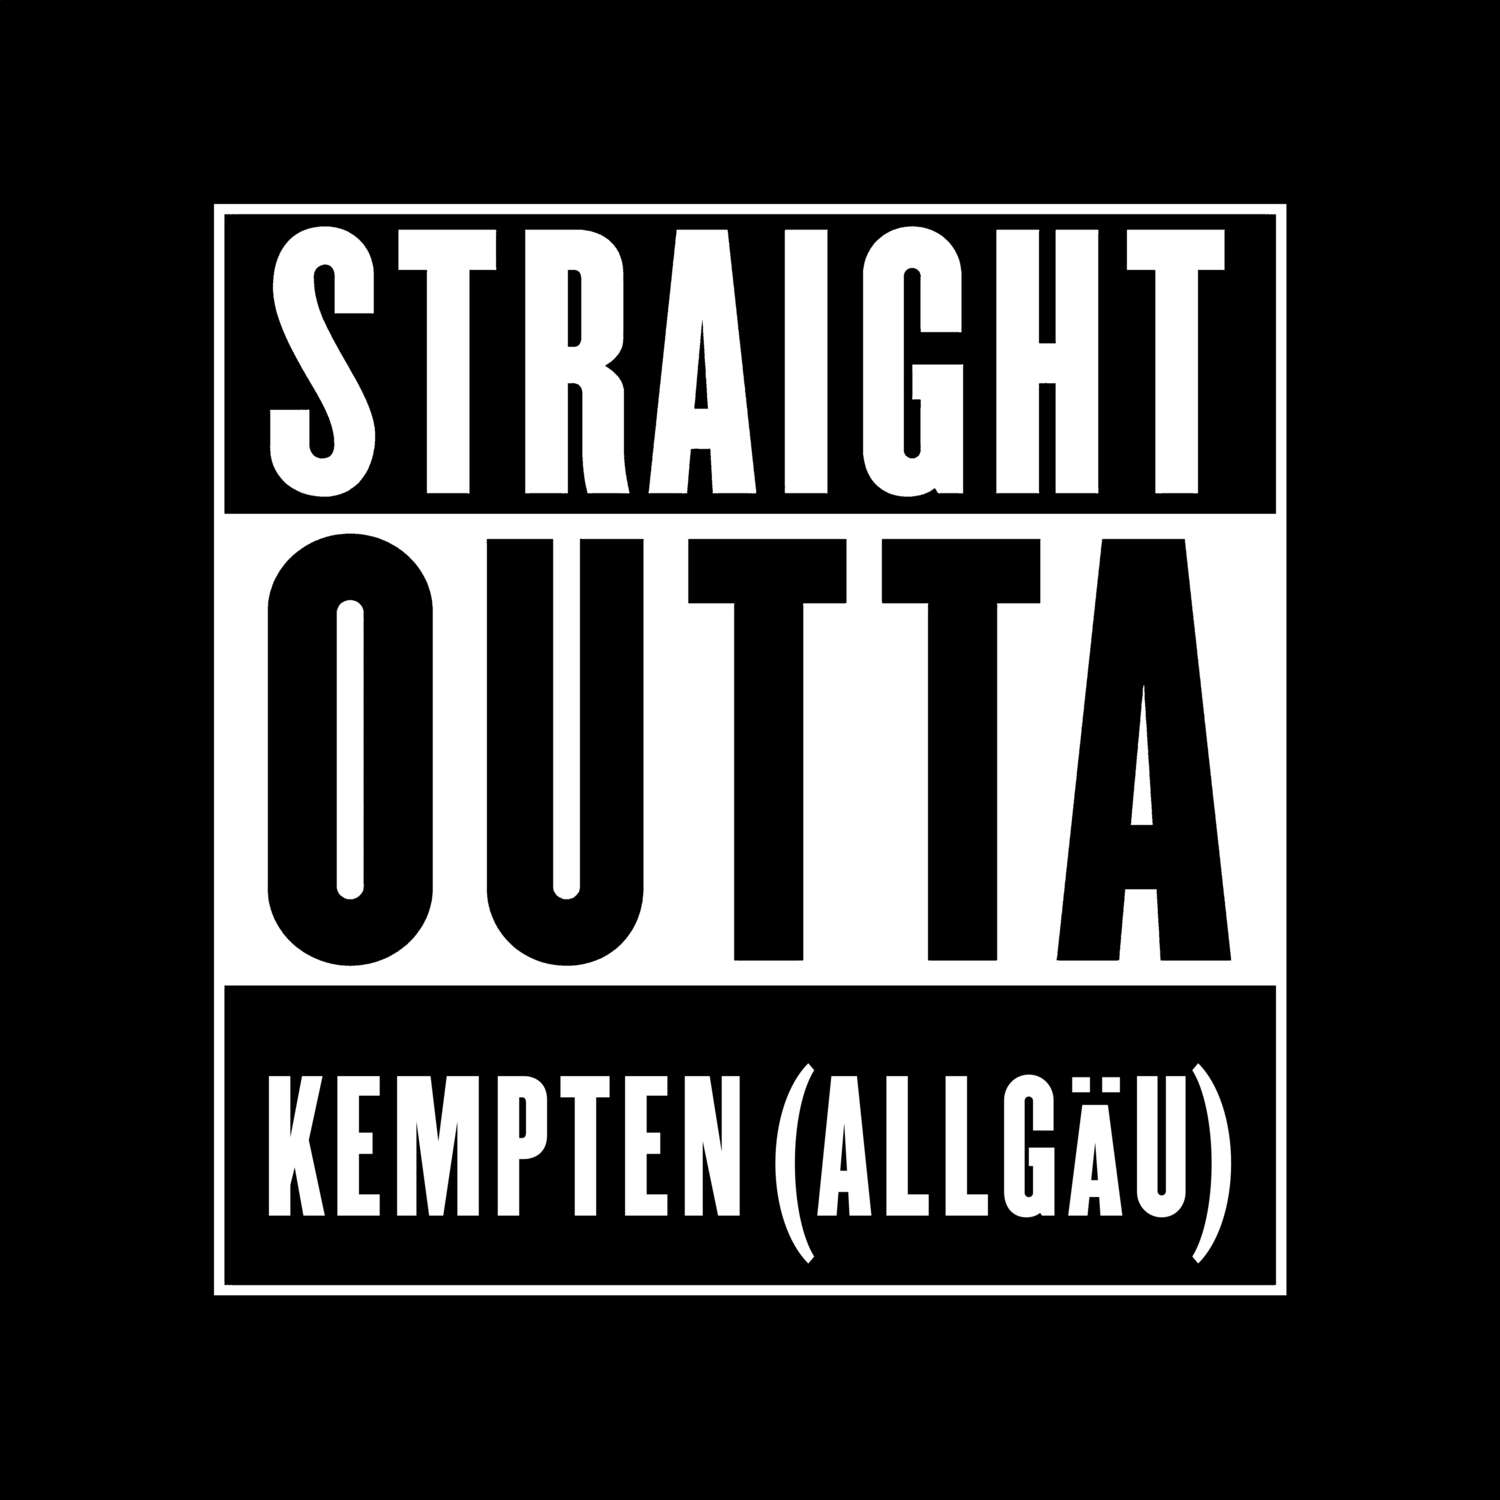 Kempten (Allgäu) T-Shirt »Straight Outta«